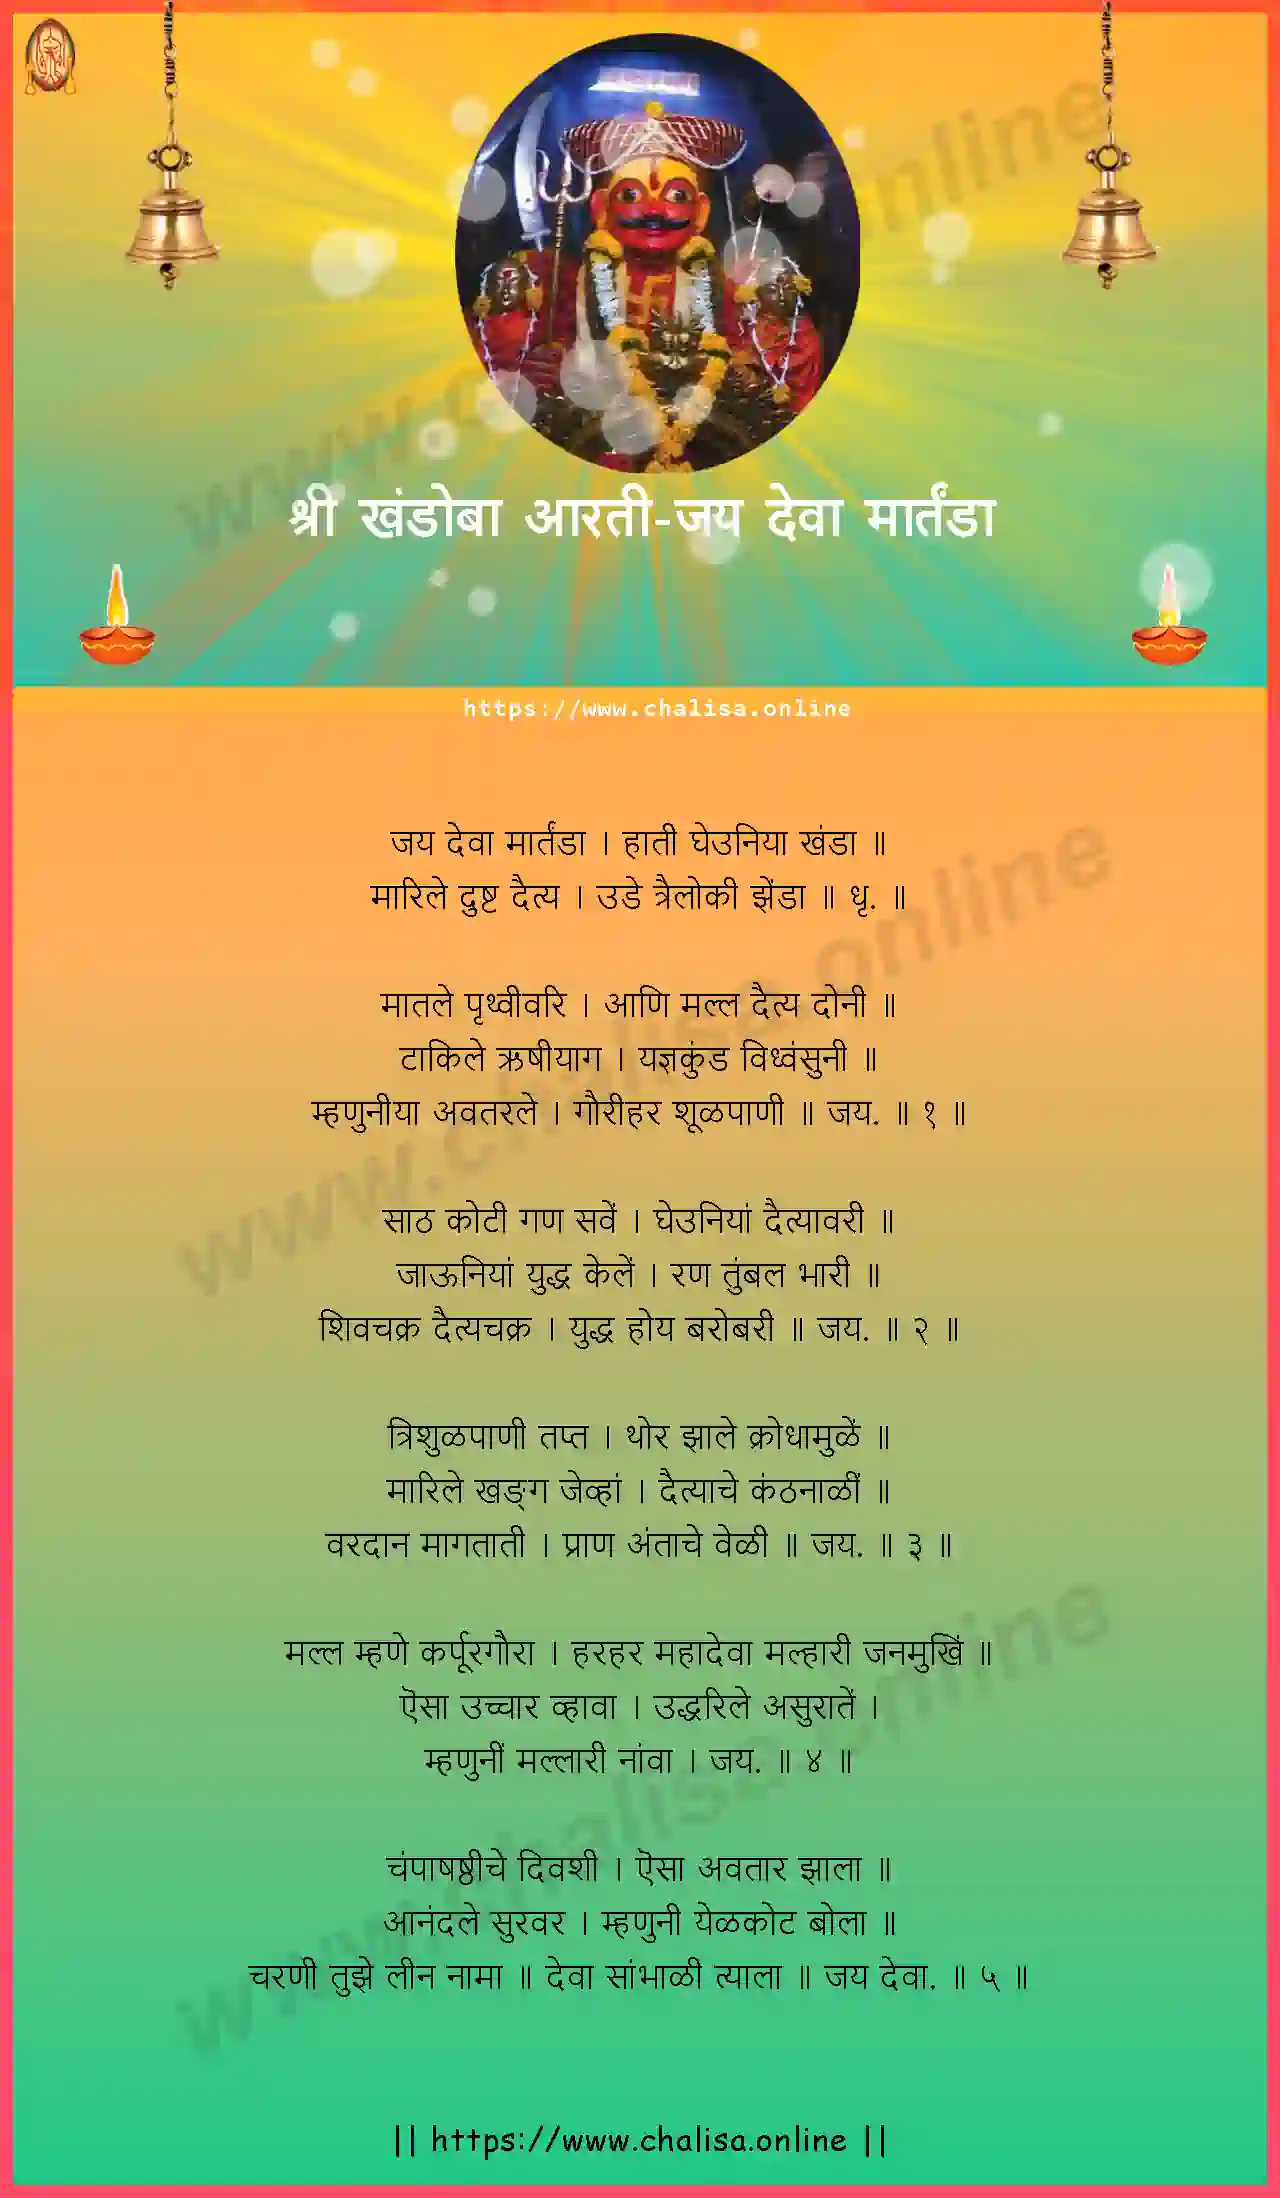 jay-deva-martanda-khandoba-aarti-marathi-lyrics-download